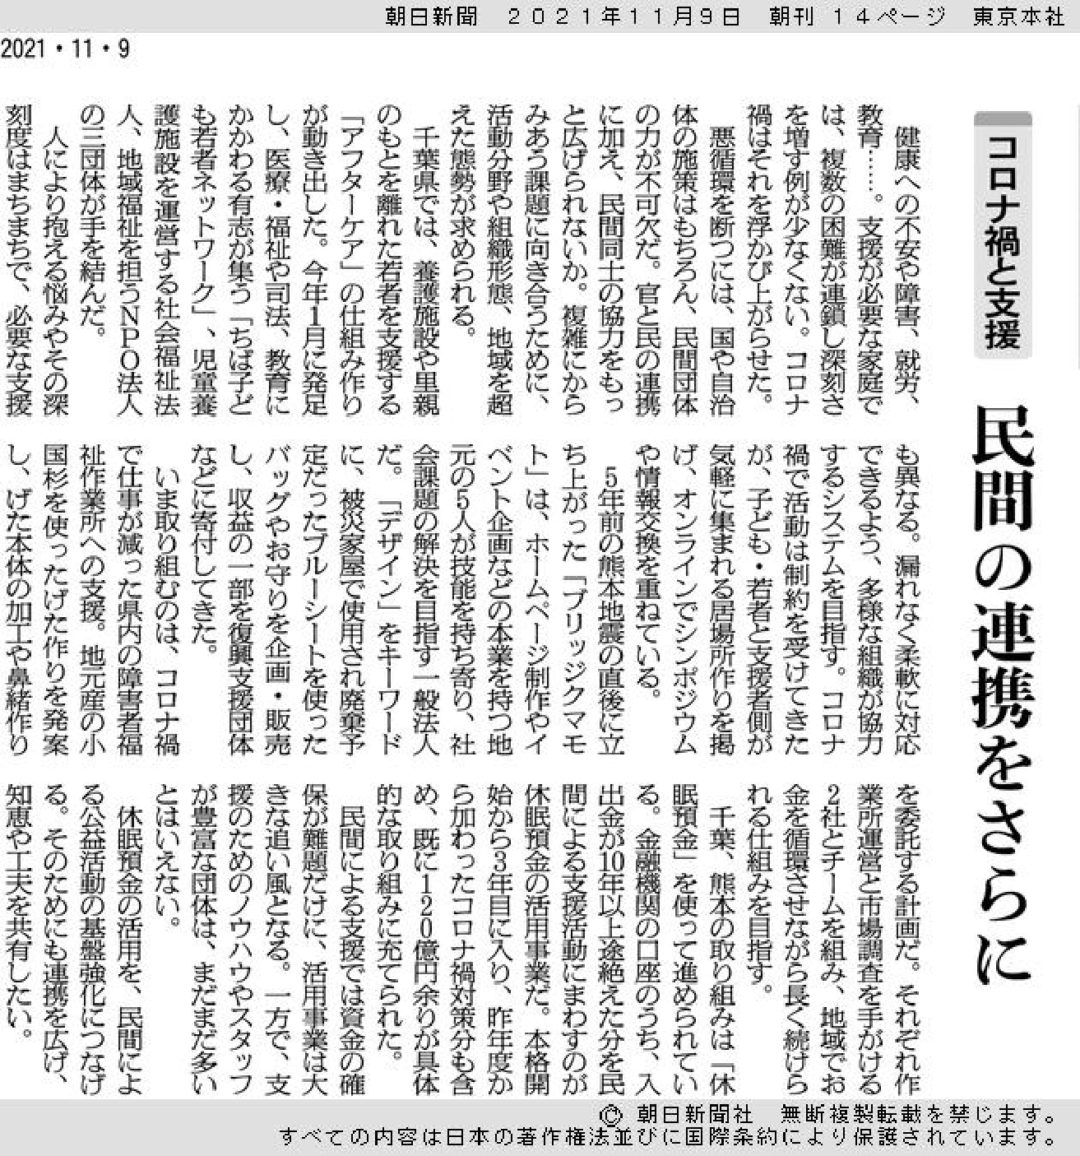 【BRIDGE HANDICAP】朝日新聞に掲載されました！